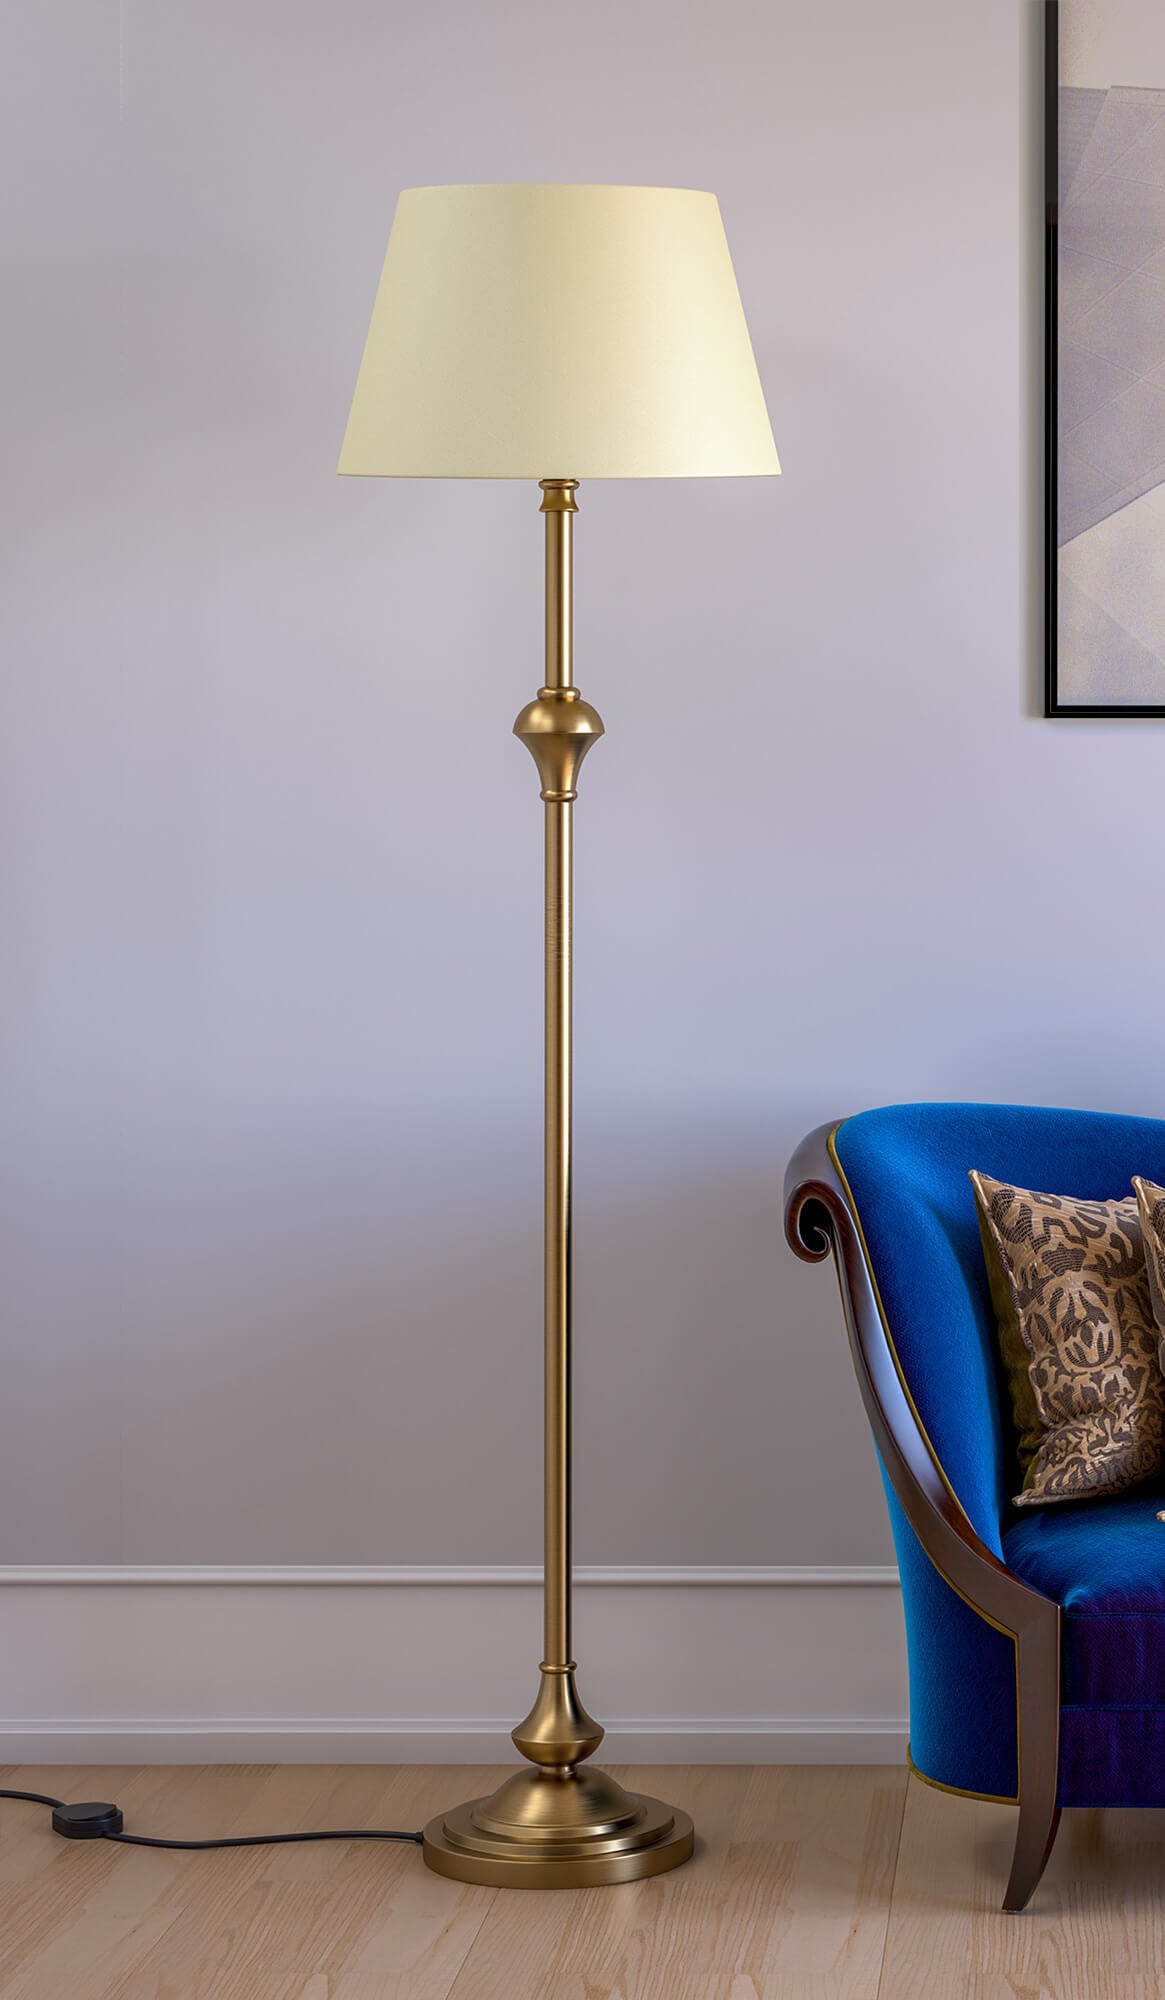 Floor Lamp Standing Brass Antique for Living room, Bedroom - Royal